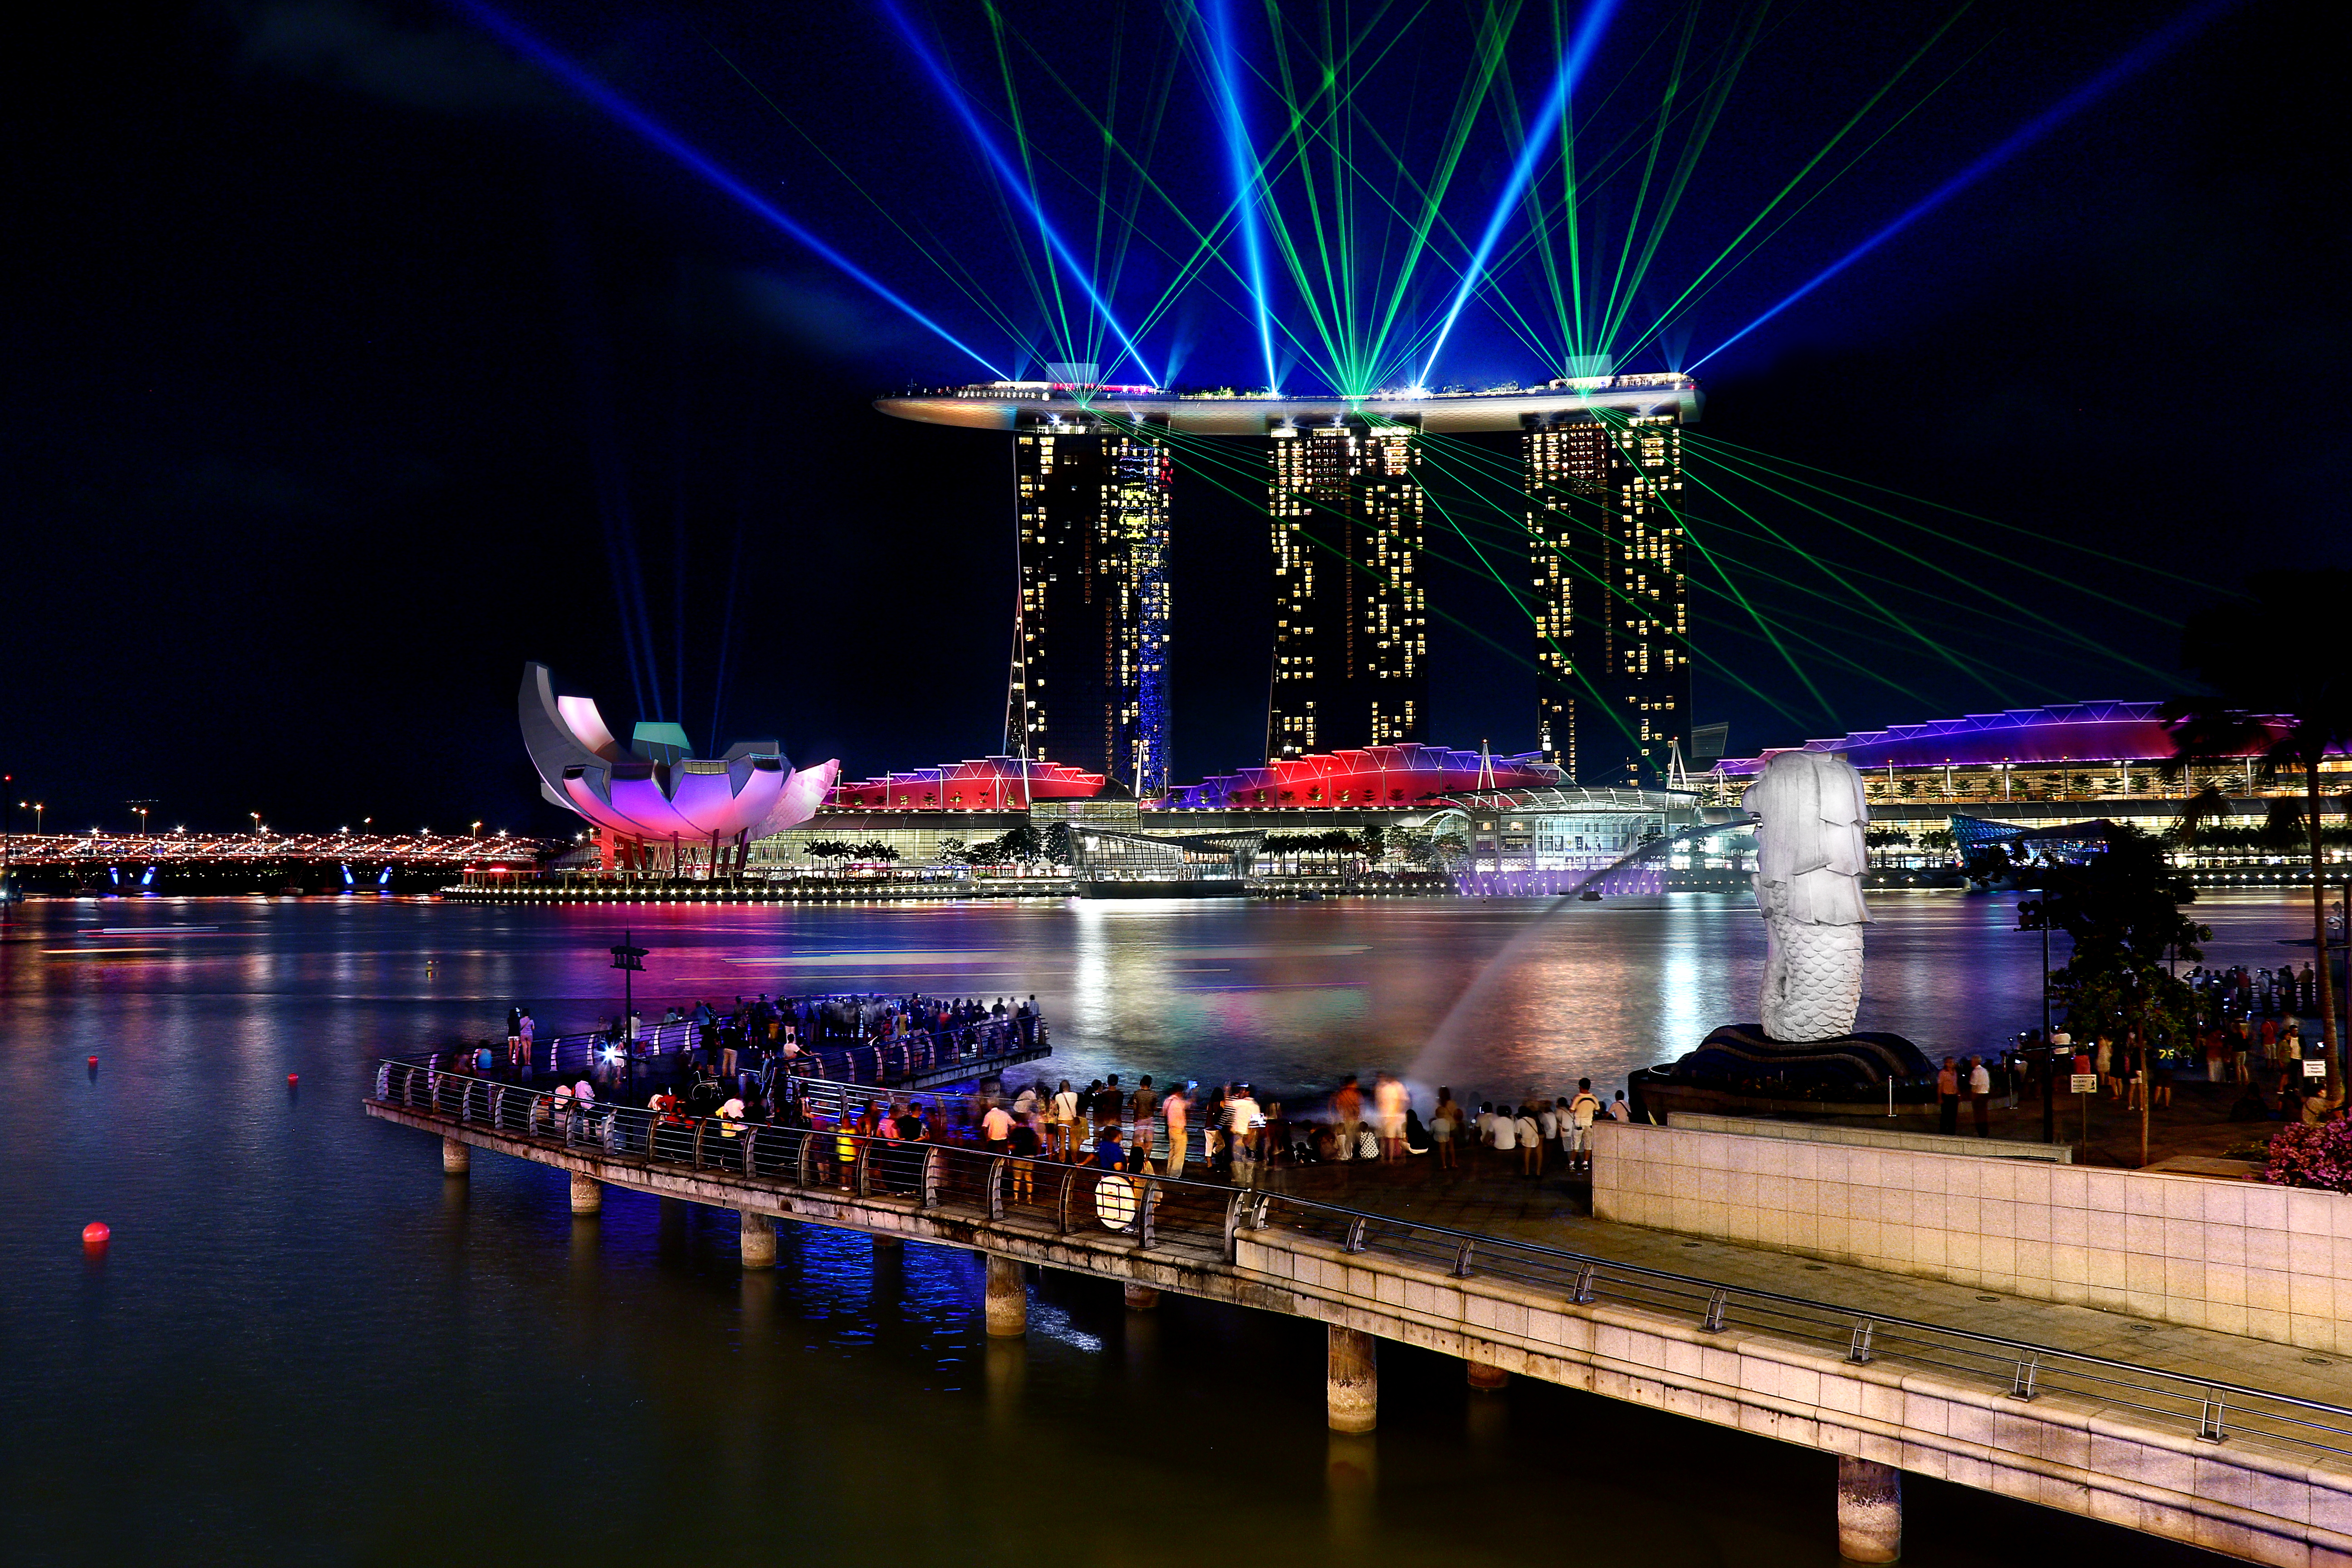 File:Laser light at the Marina Bay Sands (8584152585).jpg - Wikimedia